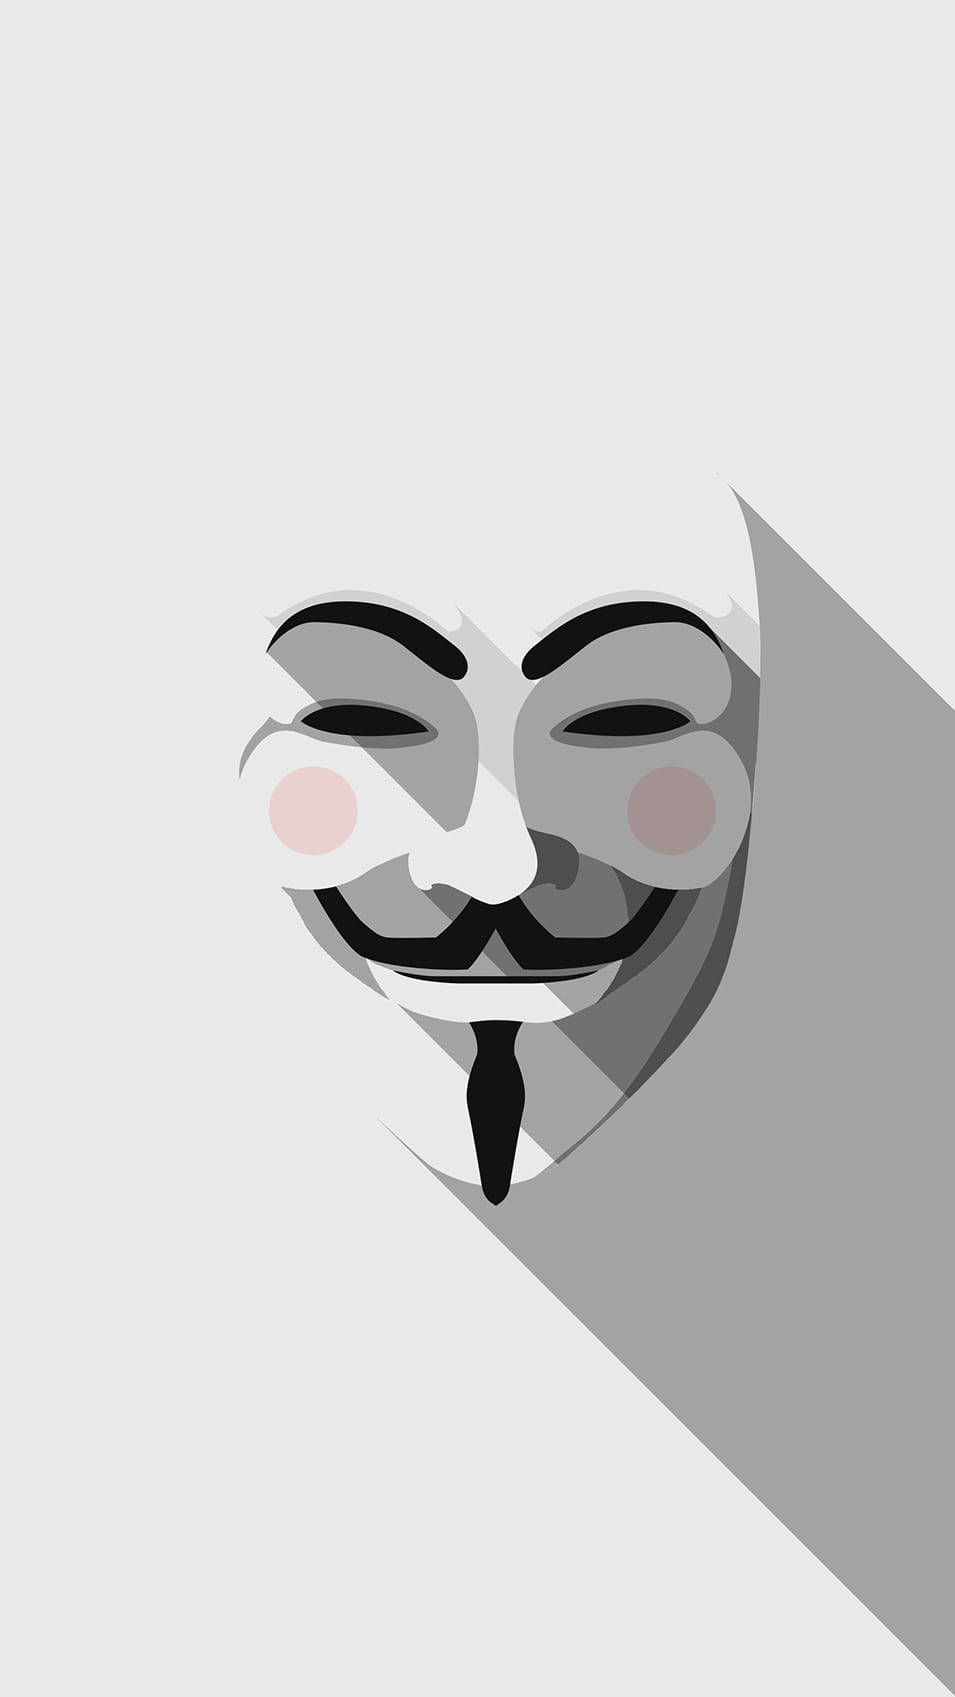 Minimalist Hacker Mask Illustration Wallpaper